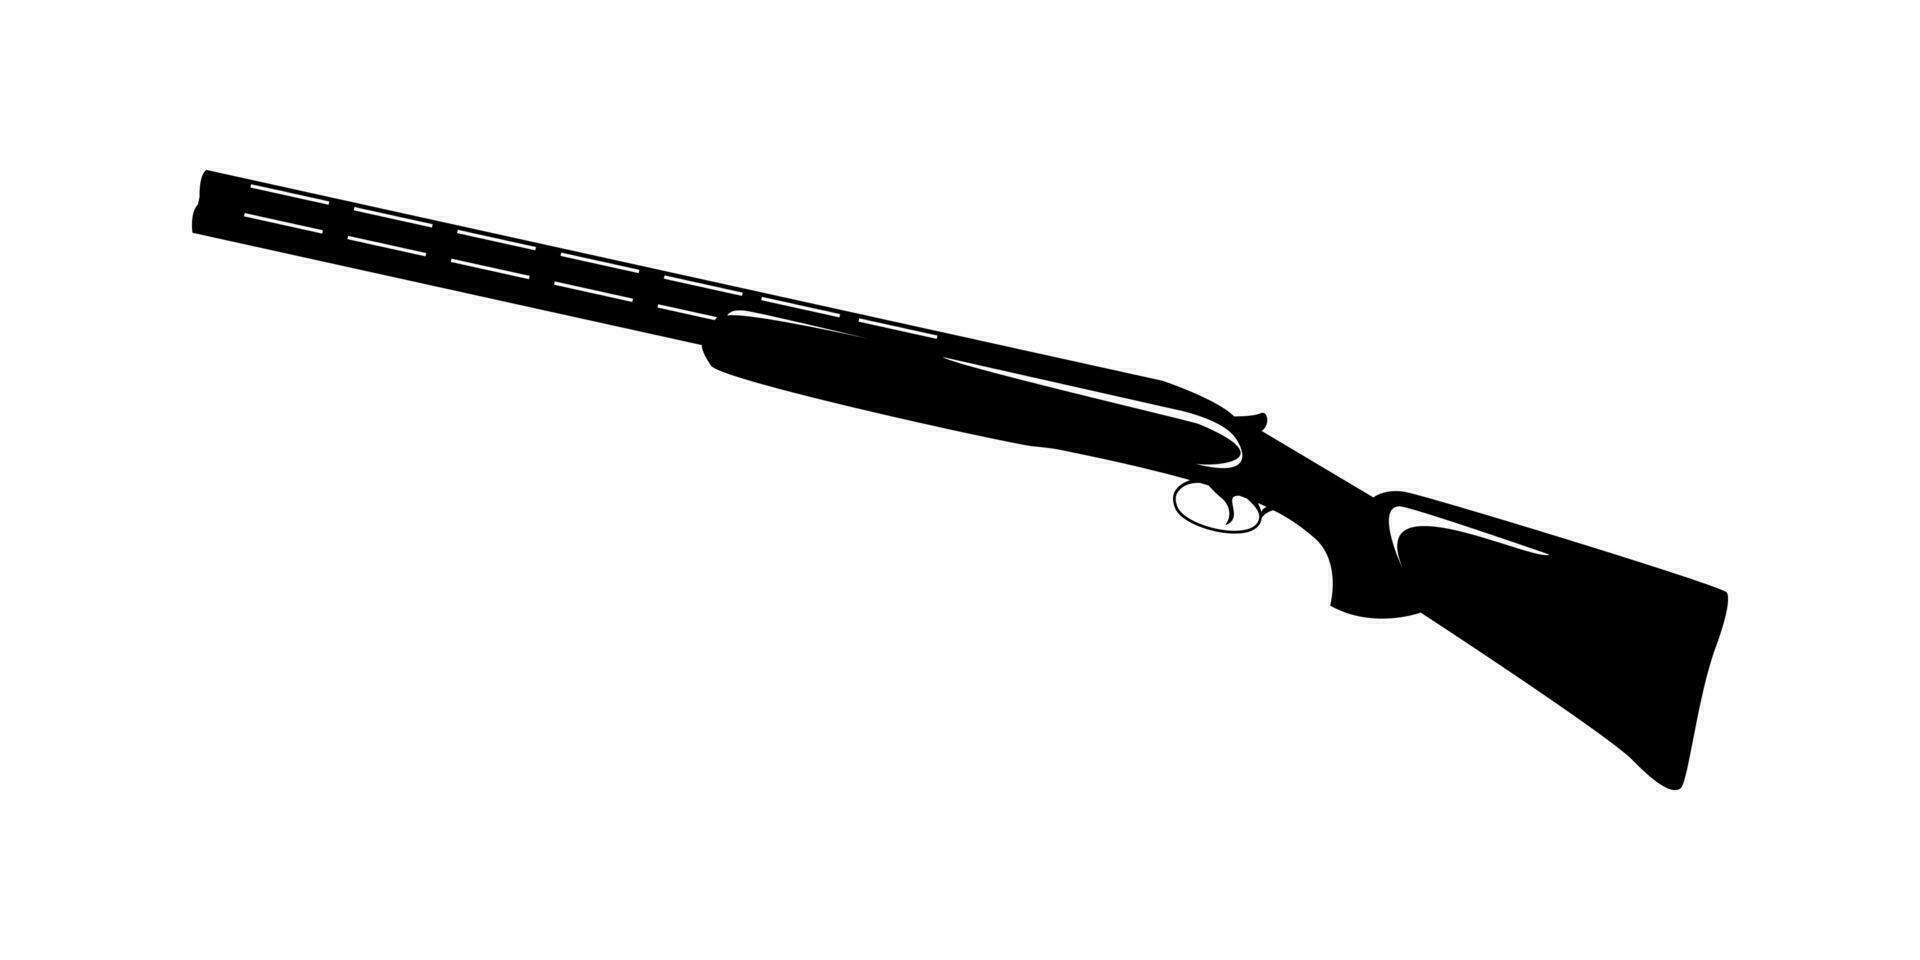 Shotgun silhouette side view. vector graphic